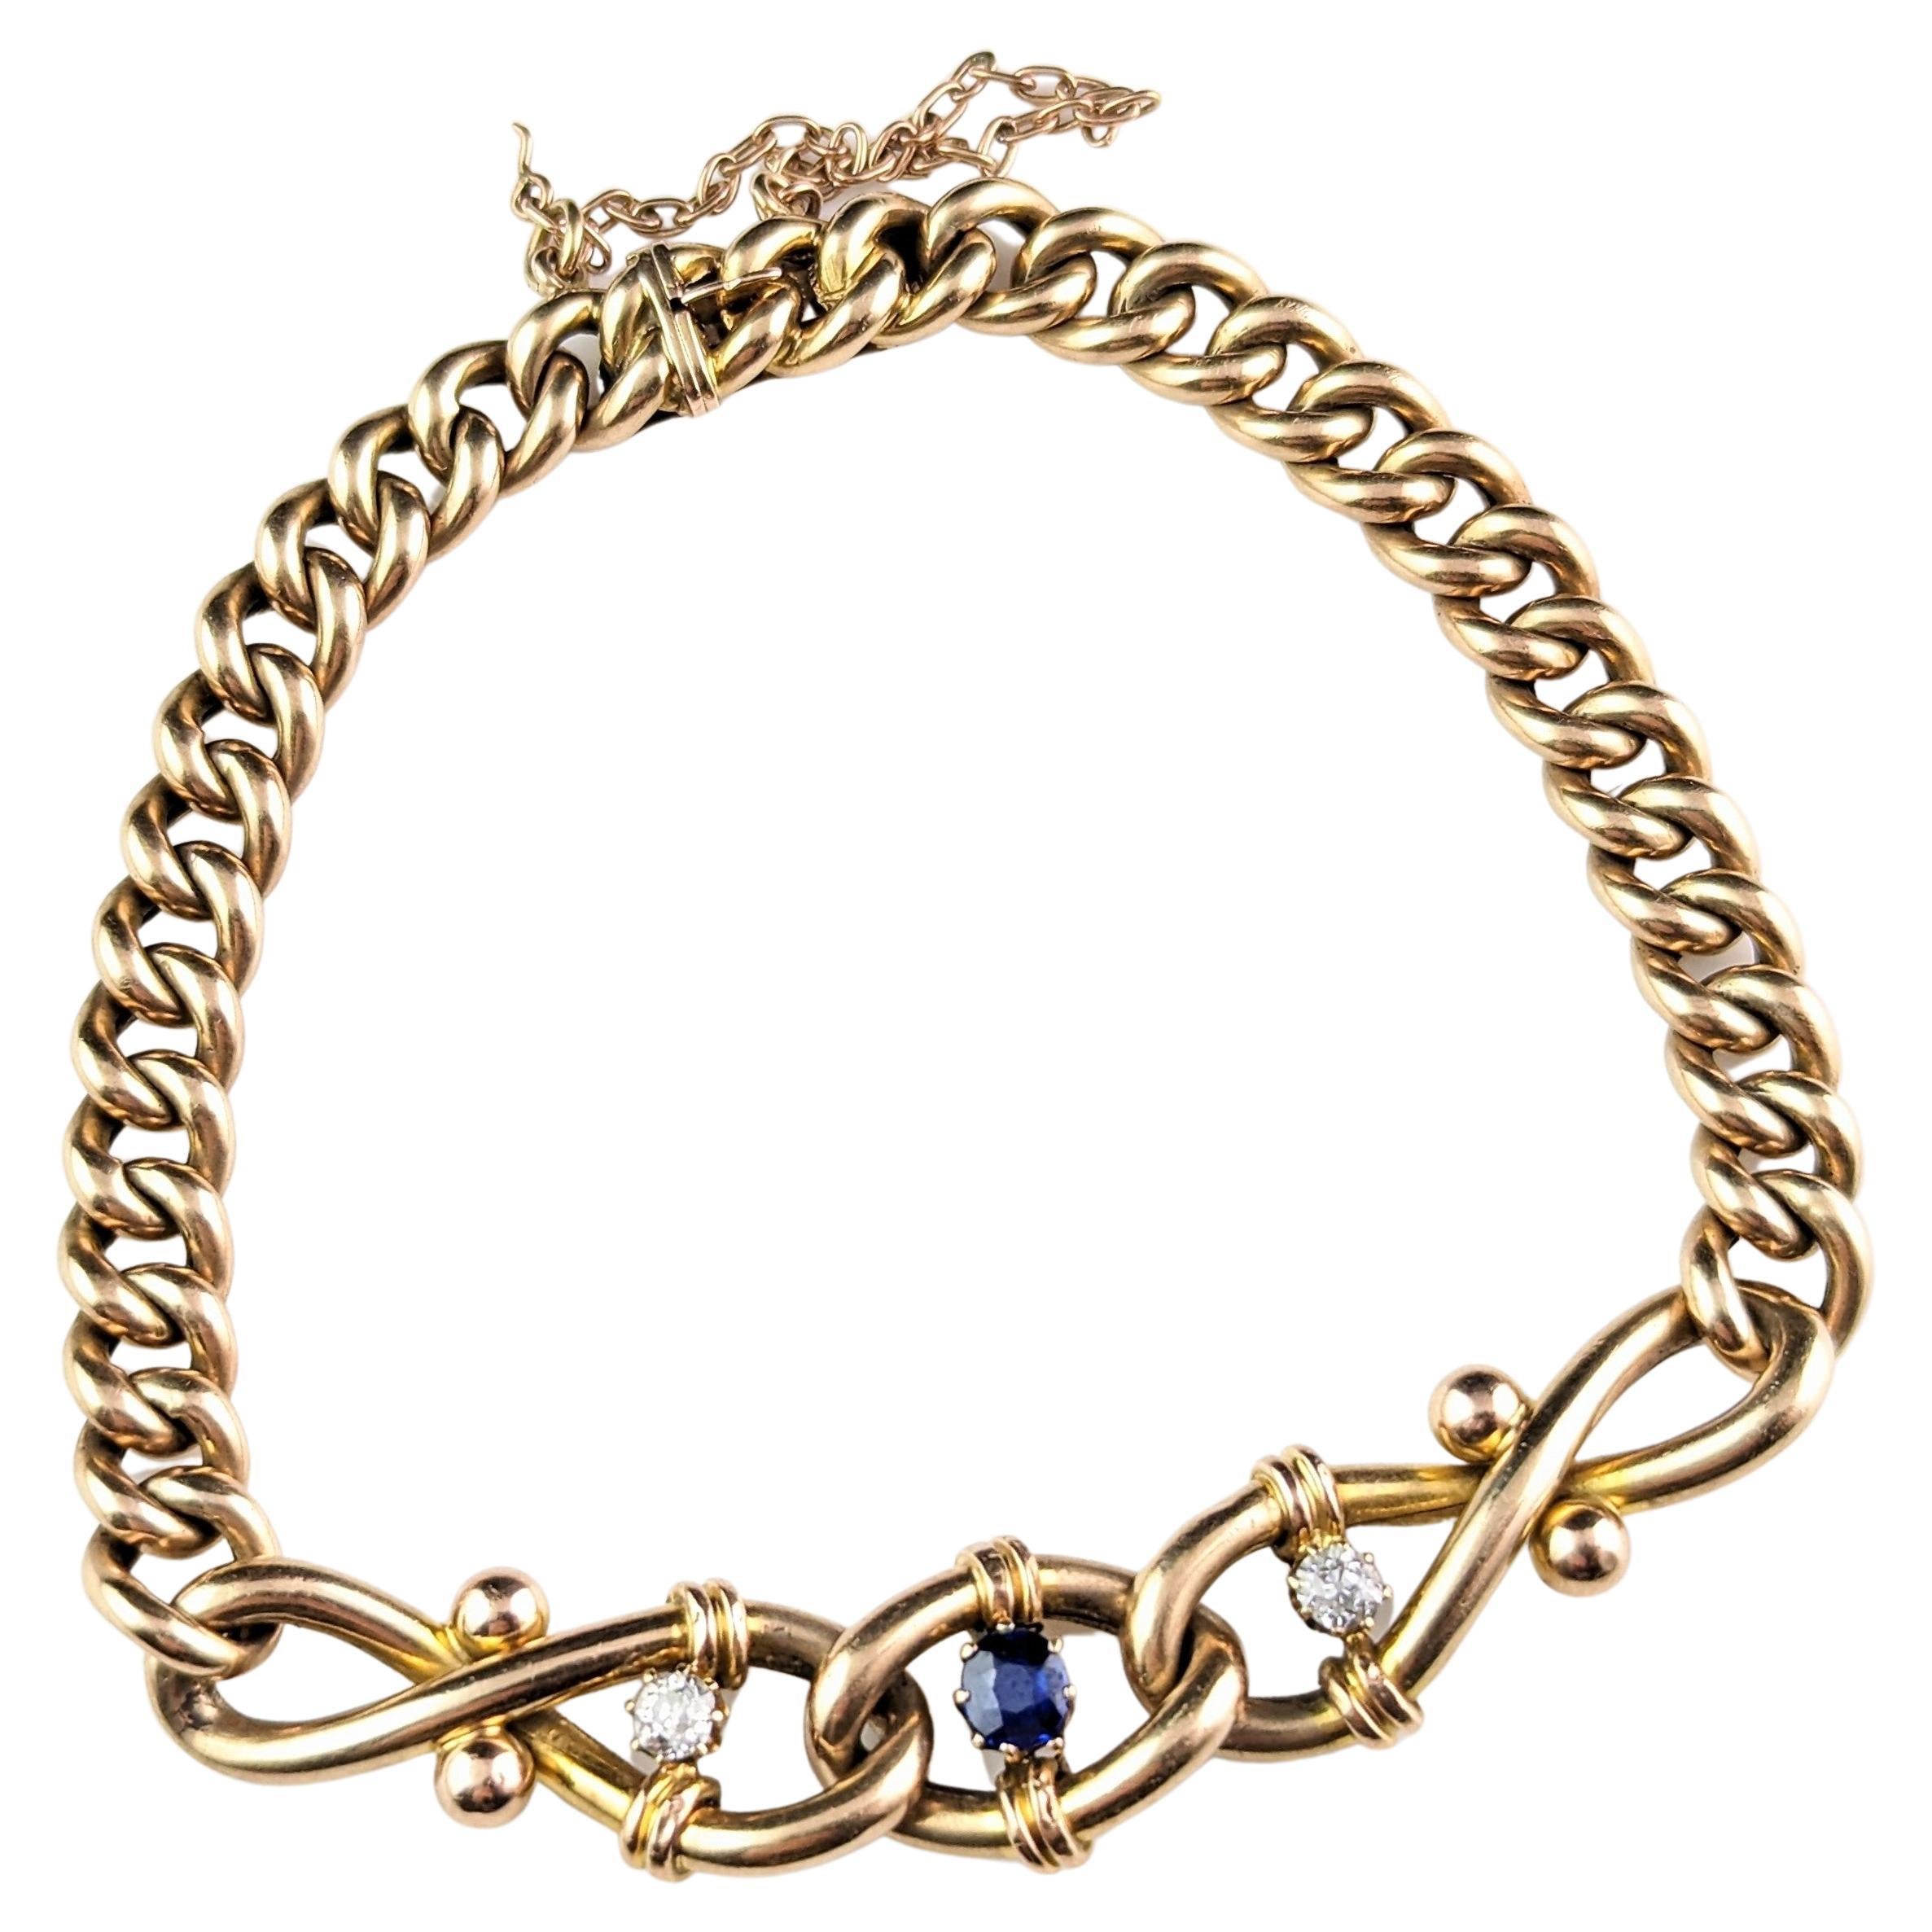 Antique Sapphire and Diamond Bracelet, Curb Link, 15k Gold